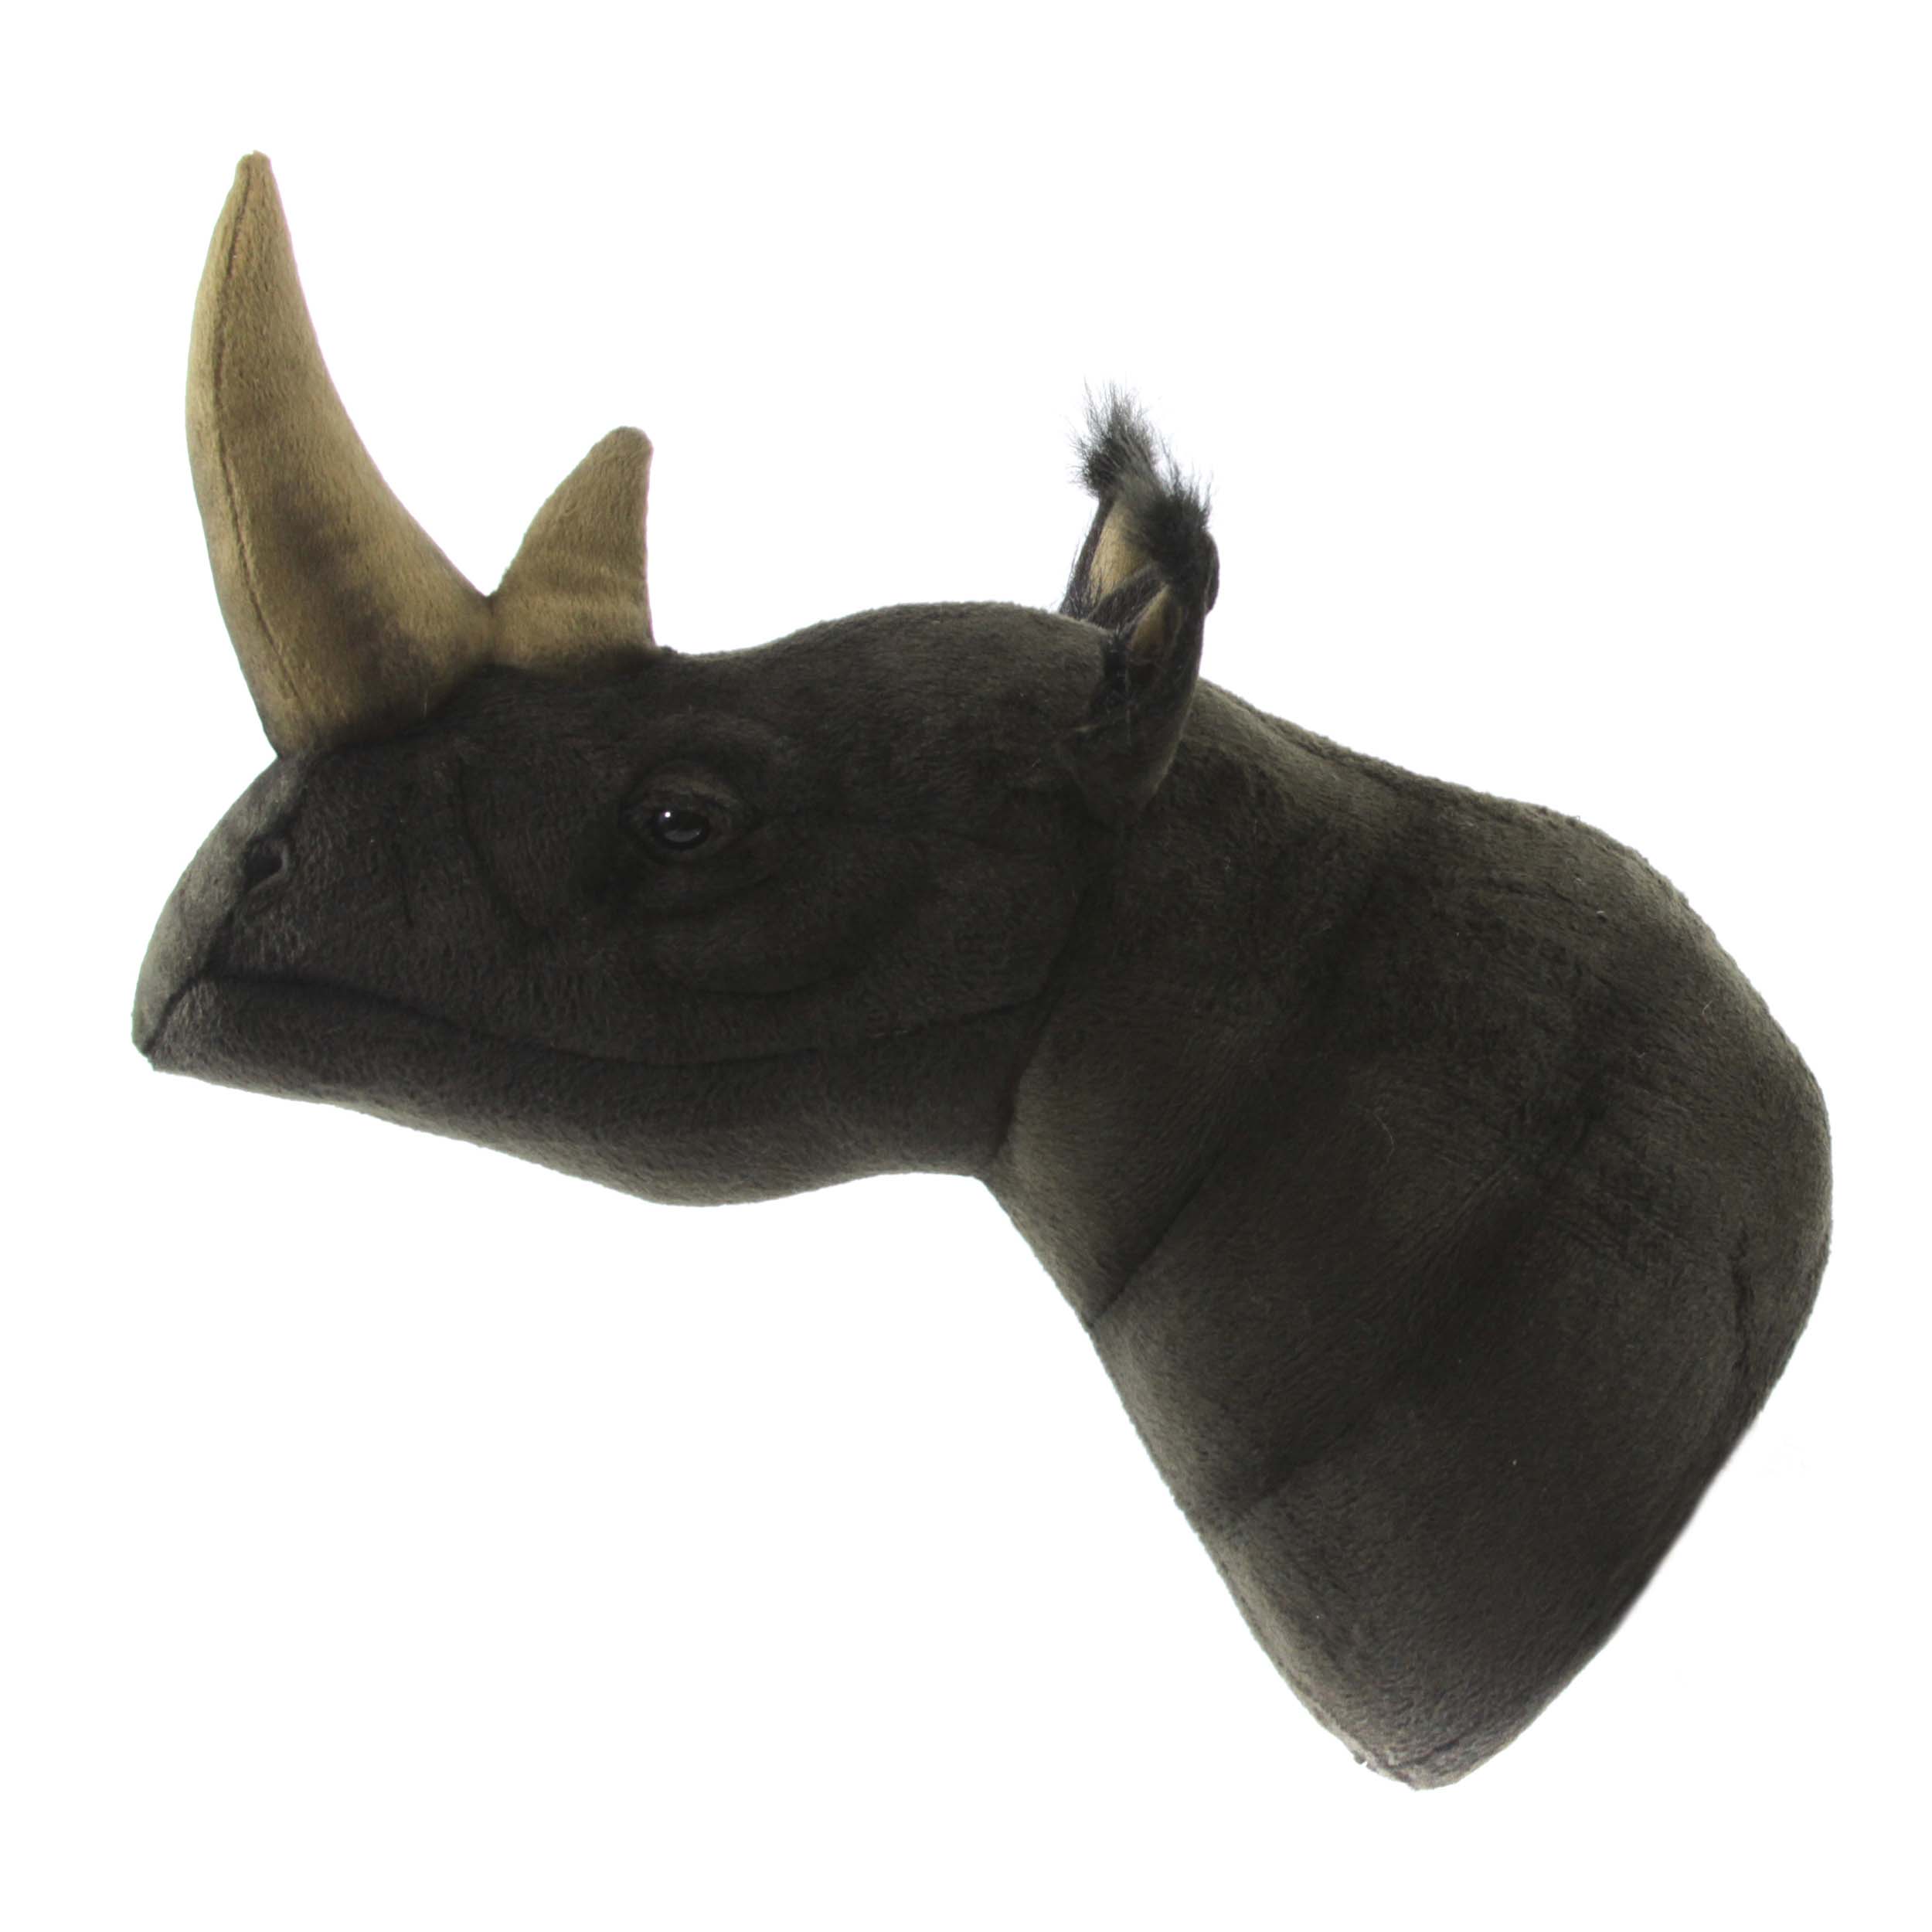 Декоративная игрушка - Голова носорога, 55 см  